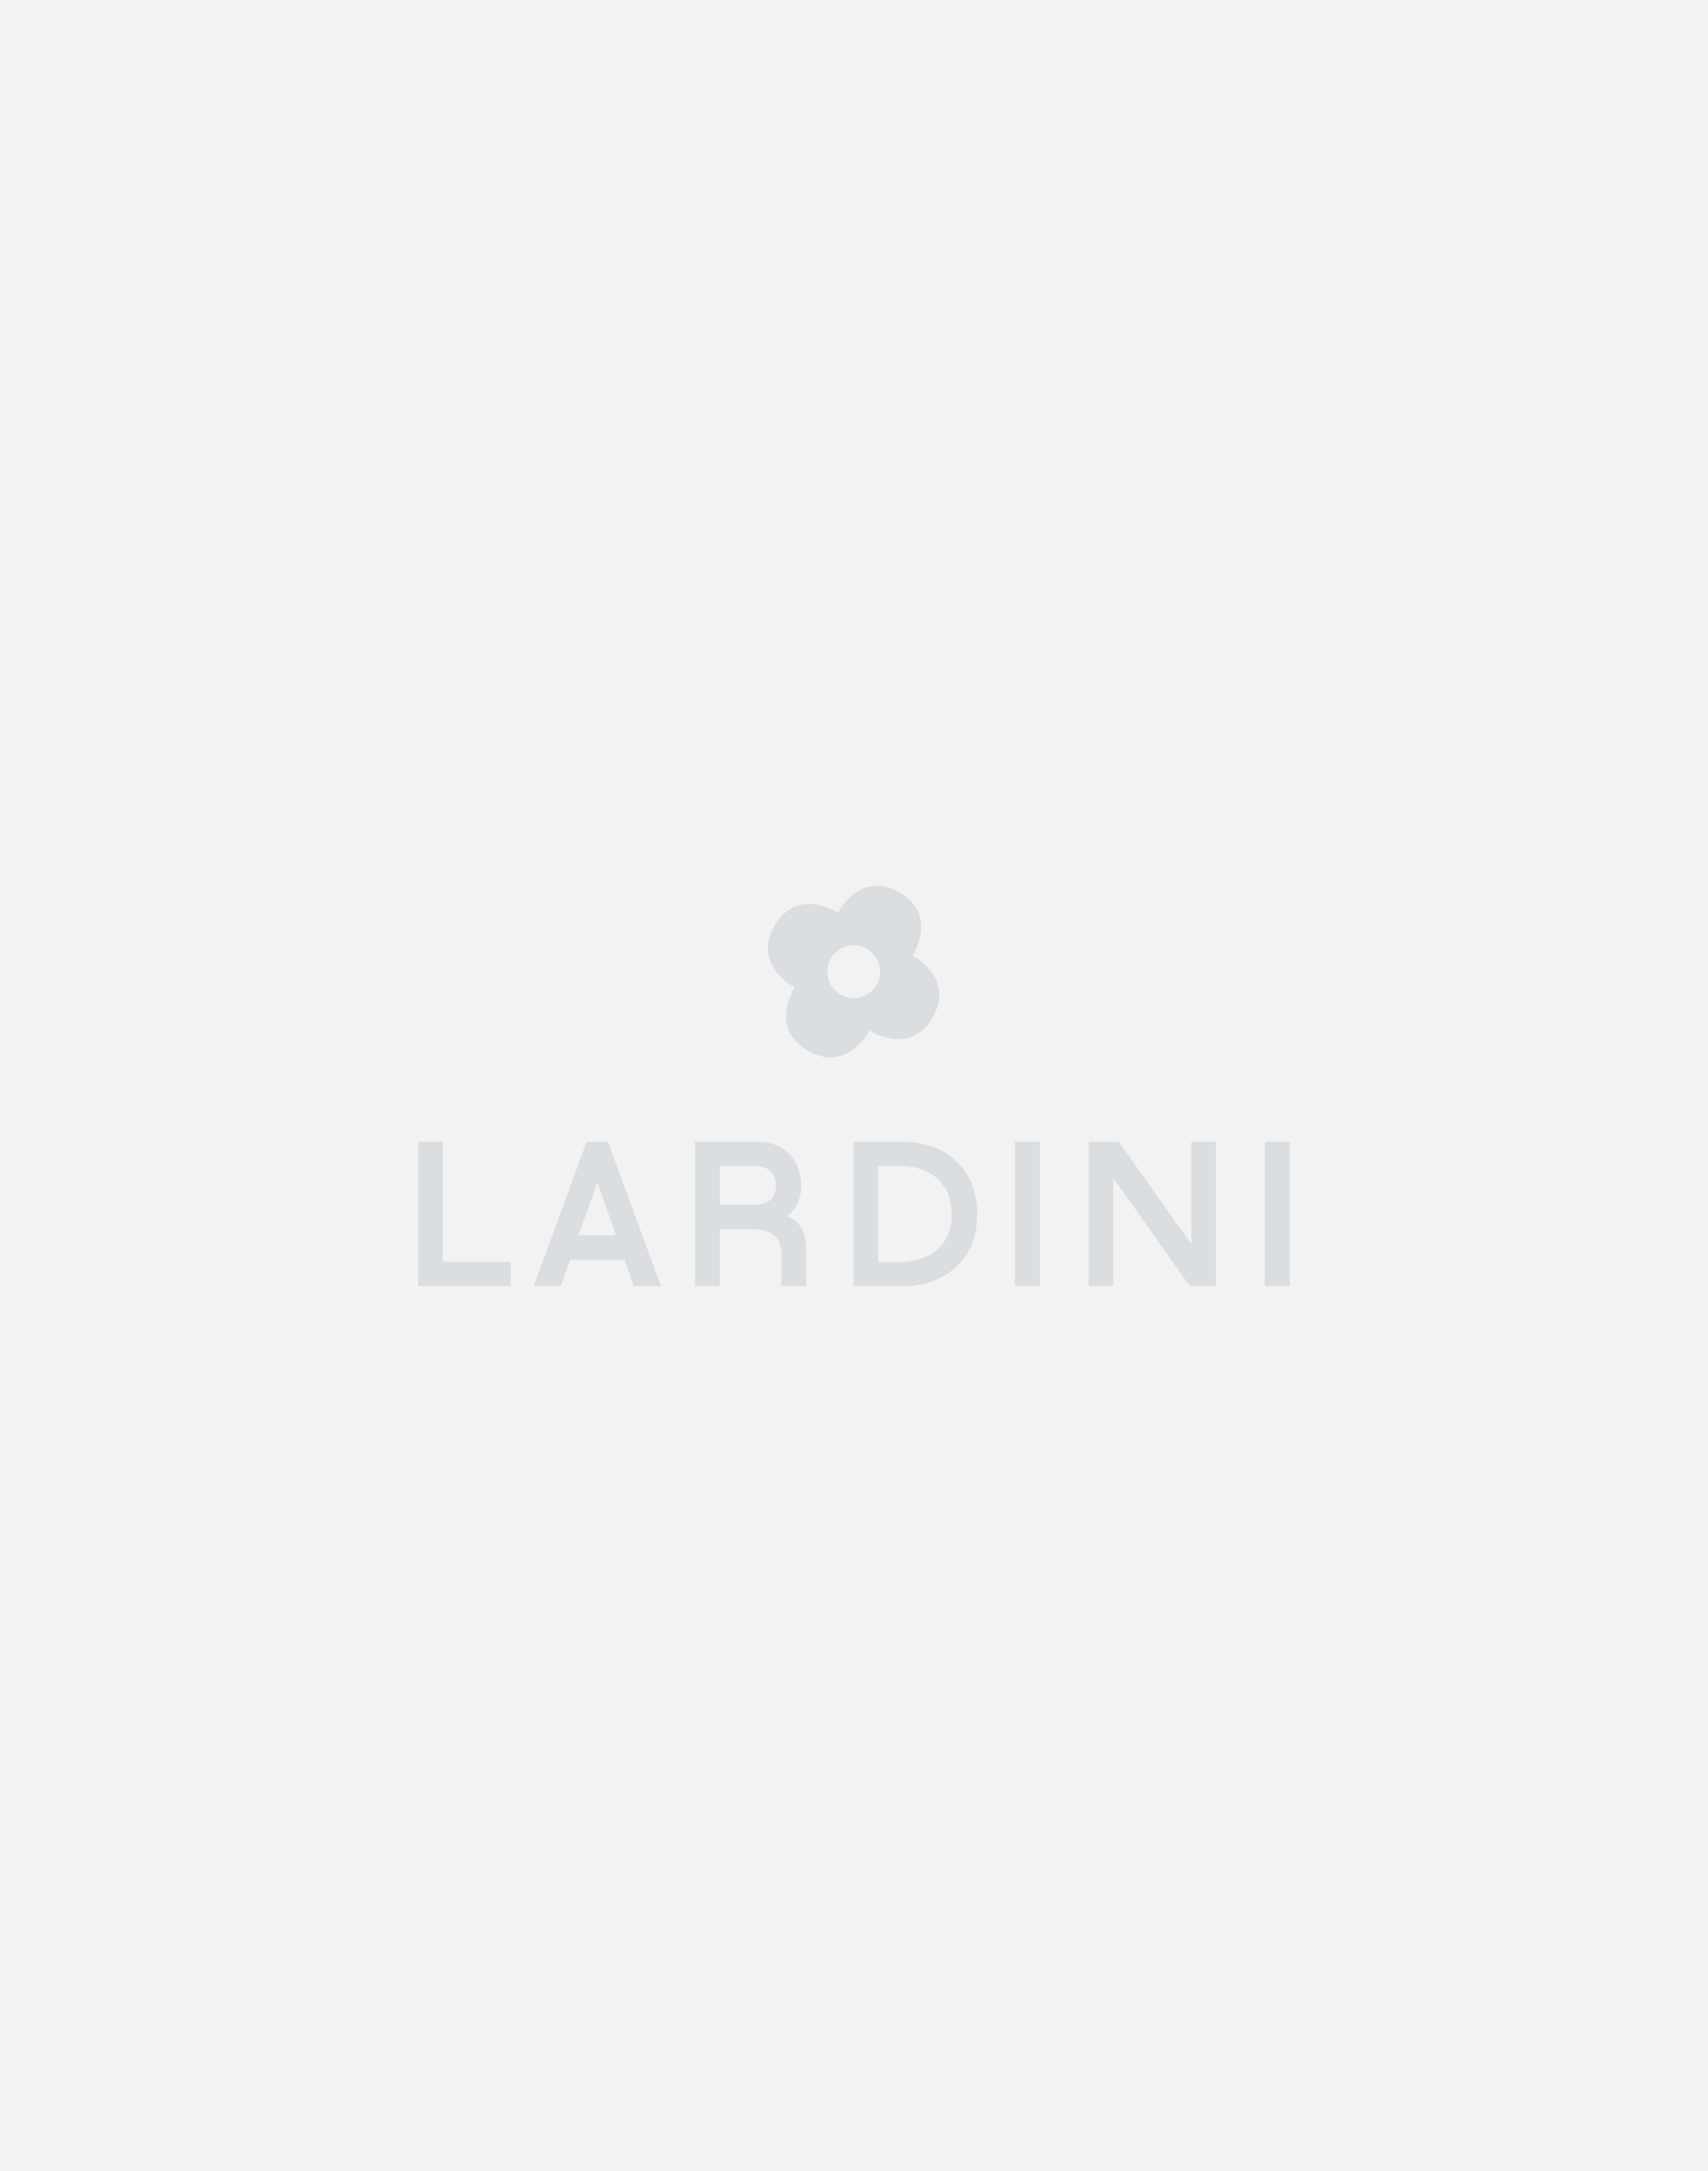 Green compact cotton polo shirt - Luigi Lardini capsule